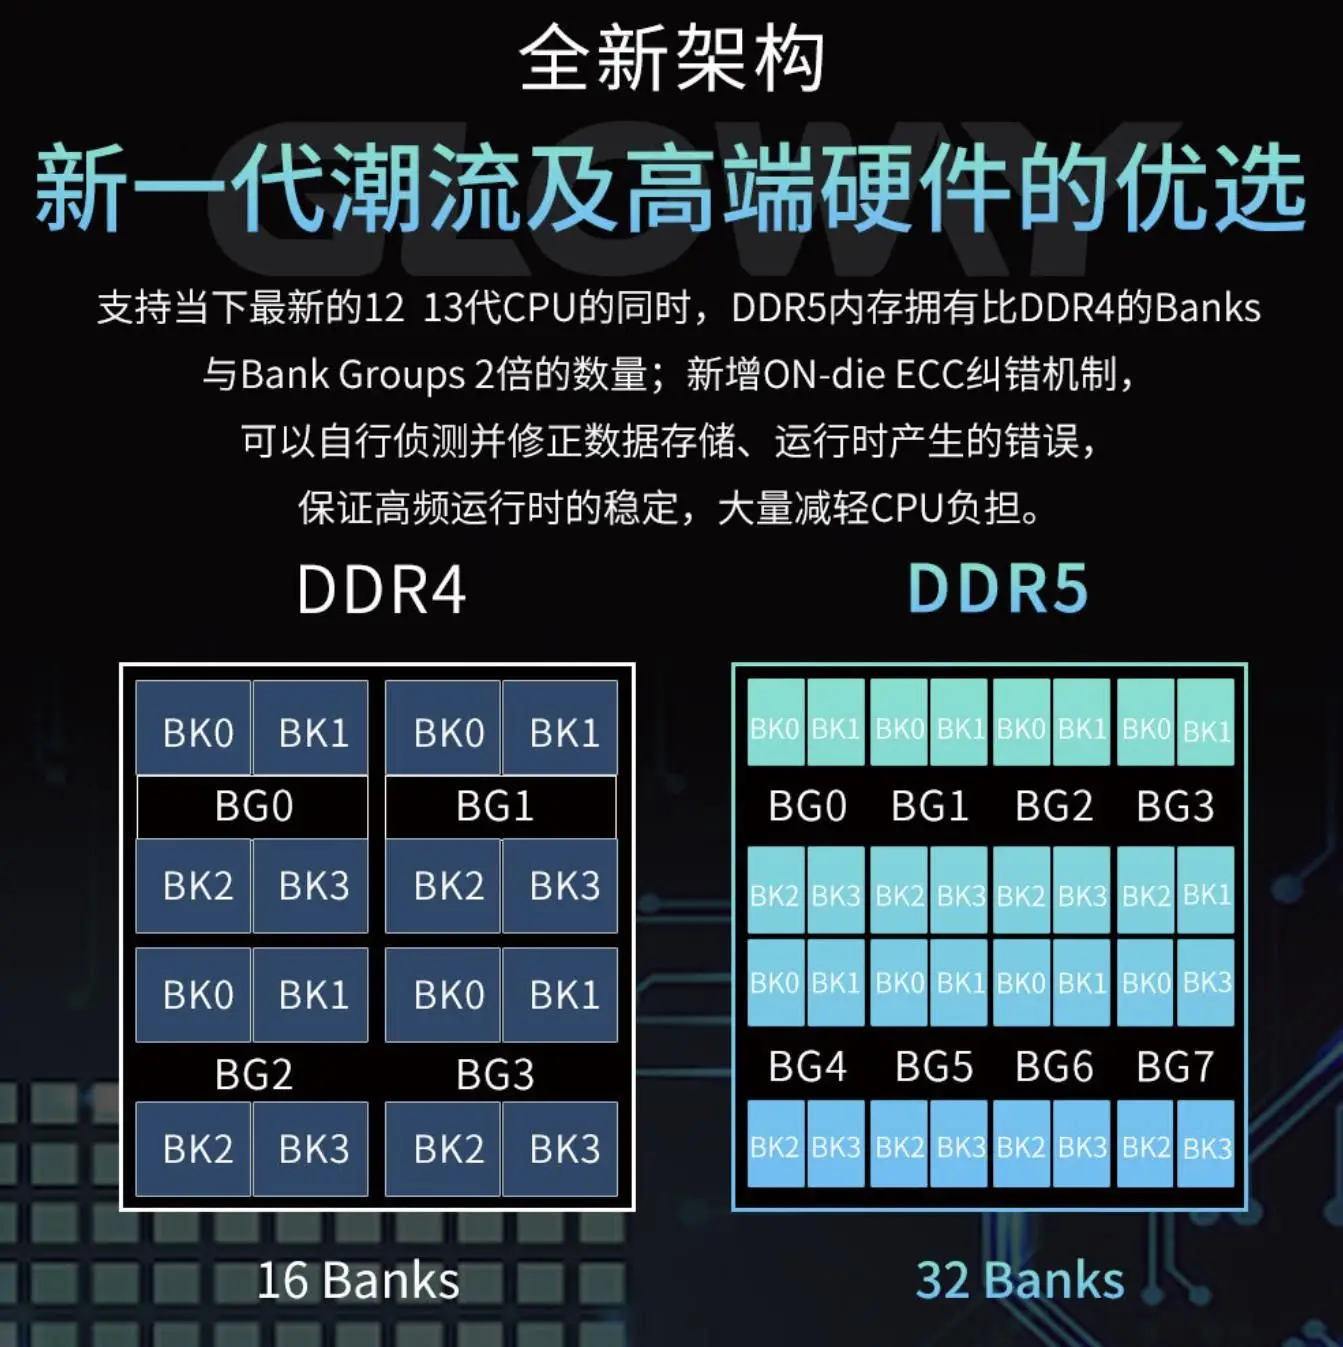 DDR5 存储模块即将问世，定价是否亲民？本文为您揭晓答案  第10张